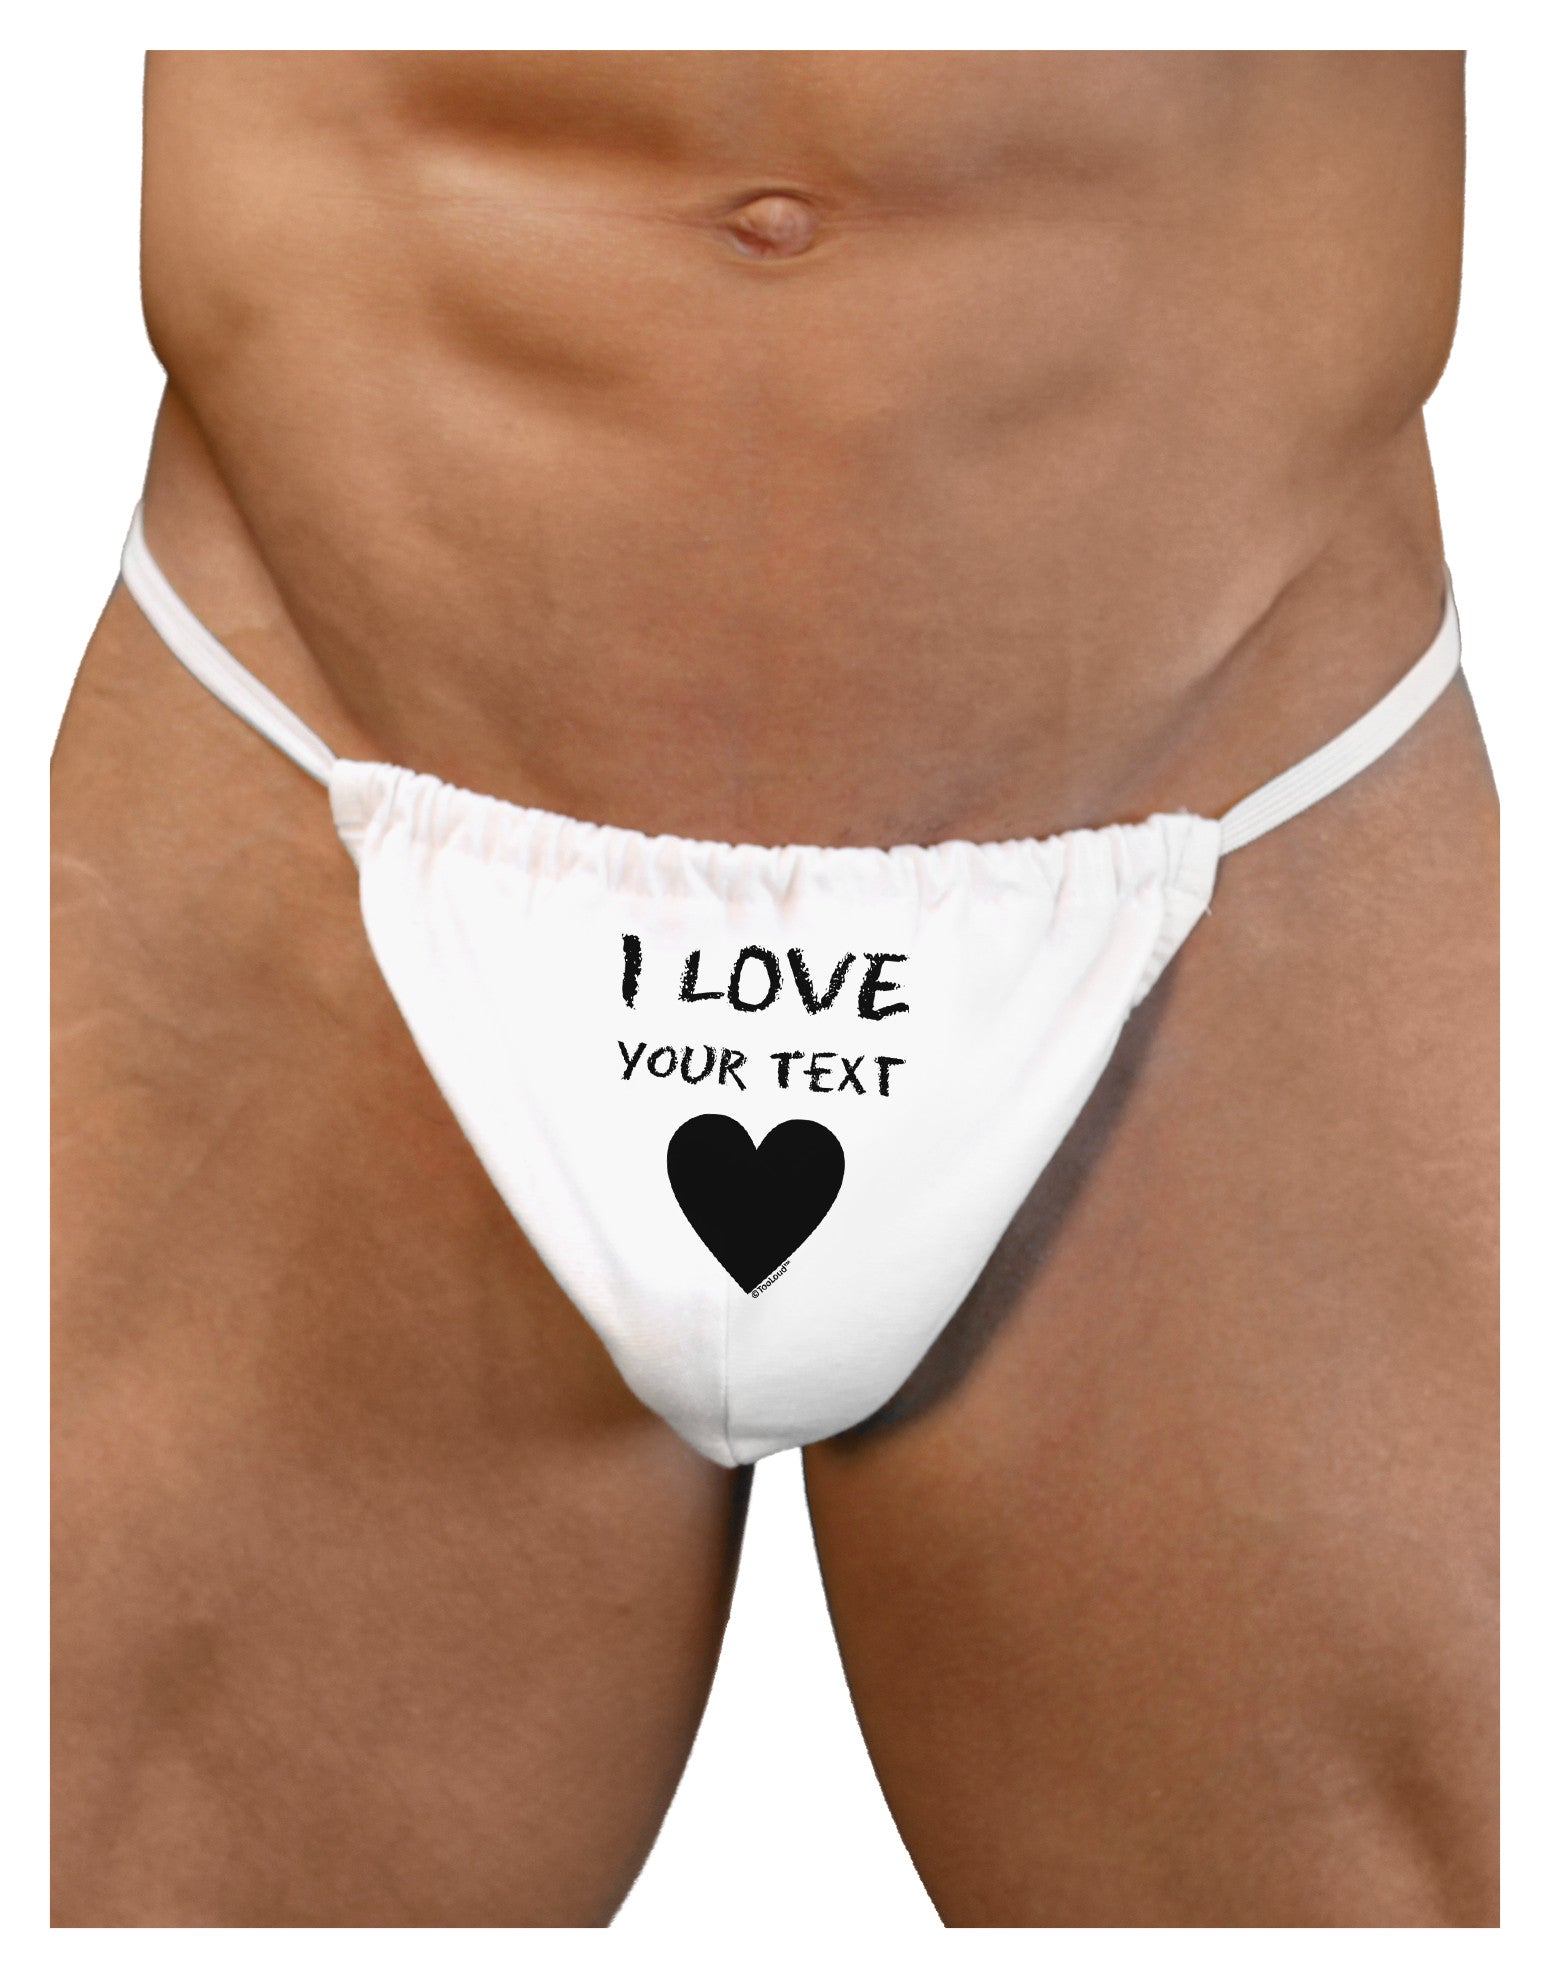 Personalized Text Underwear - Davson Sales